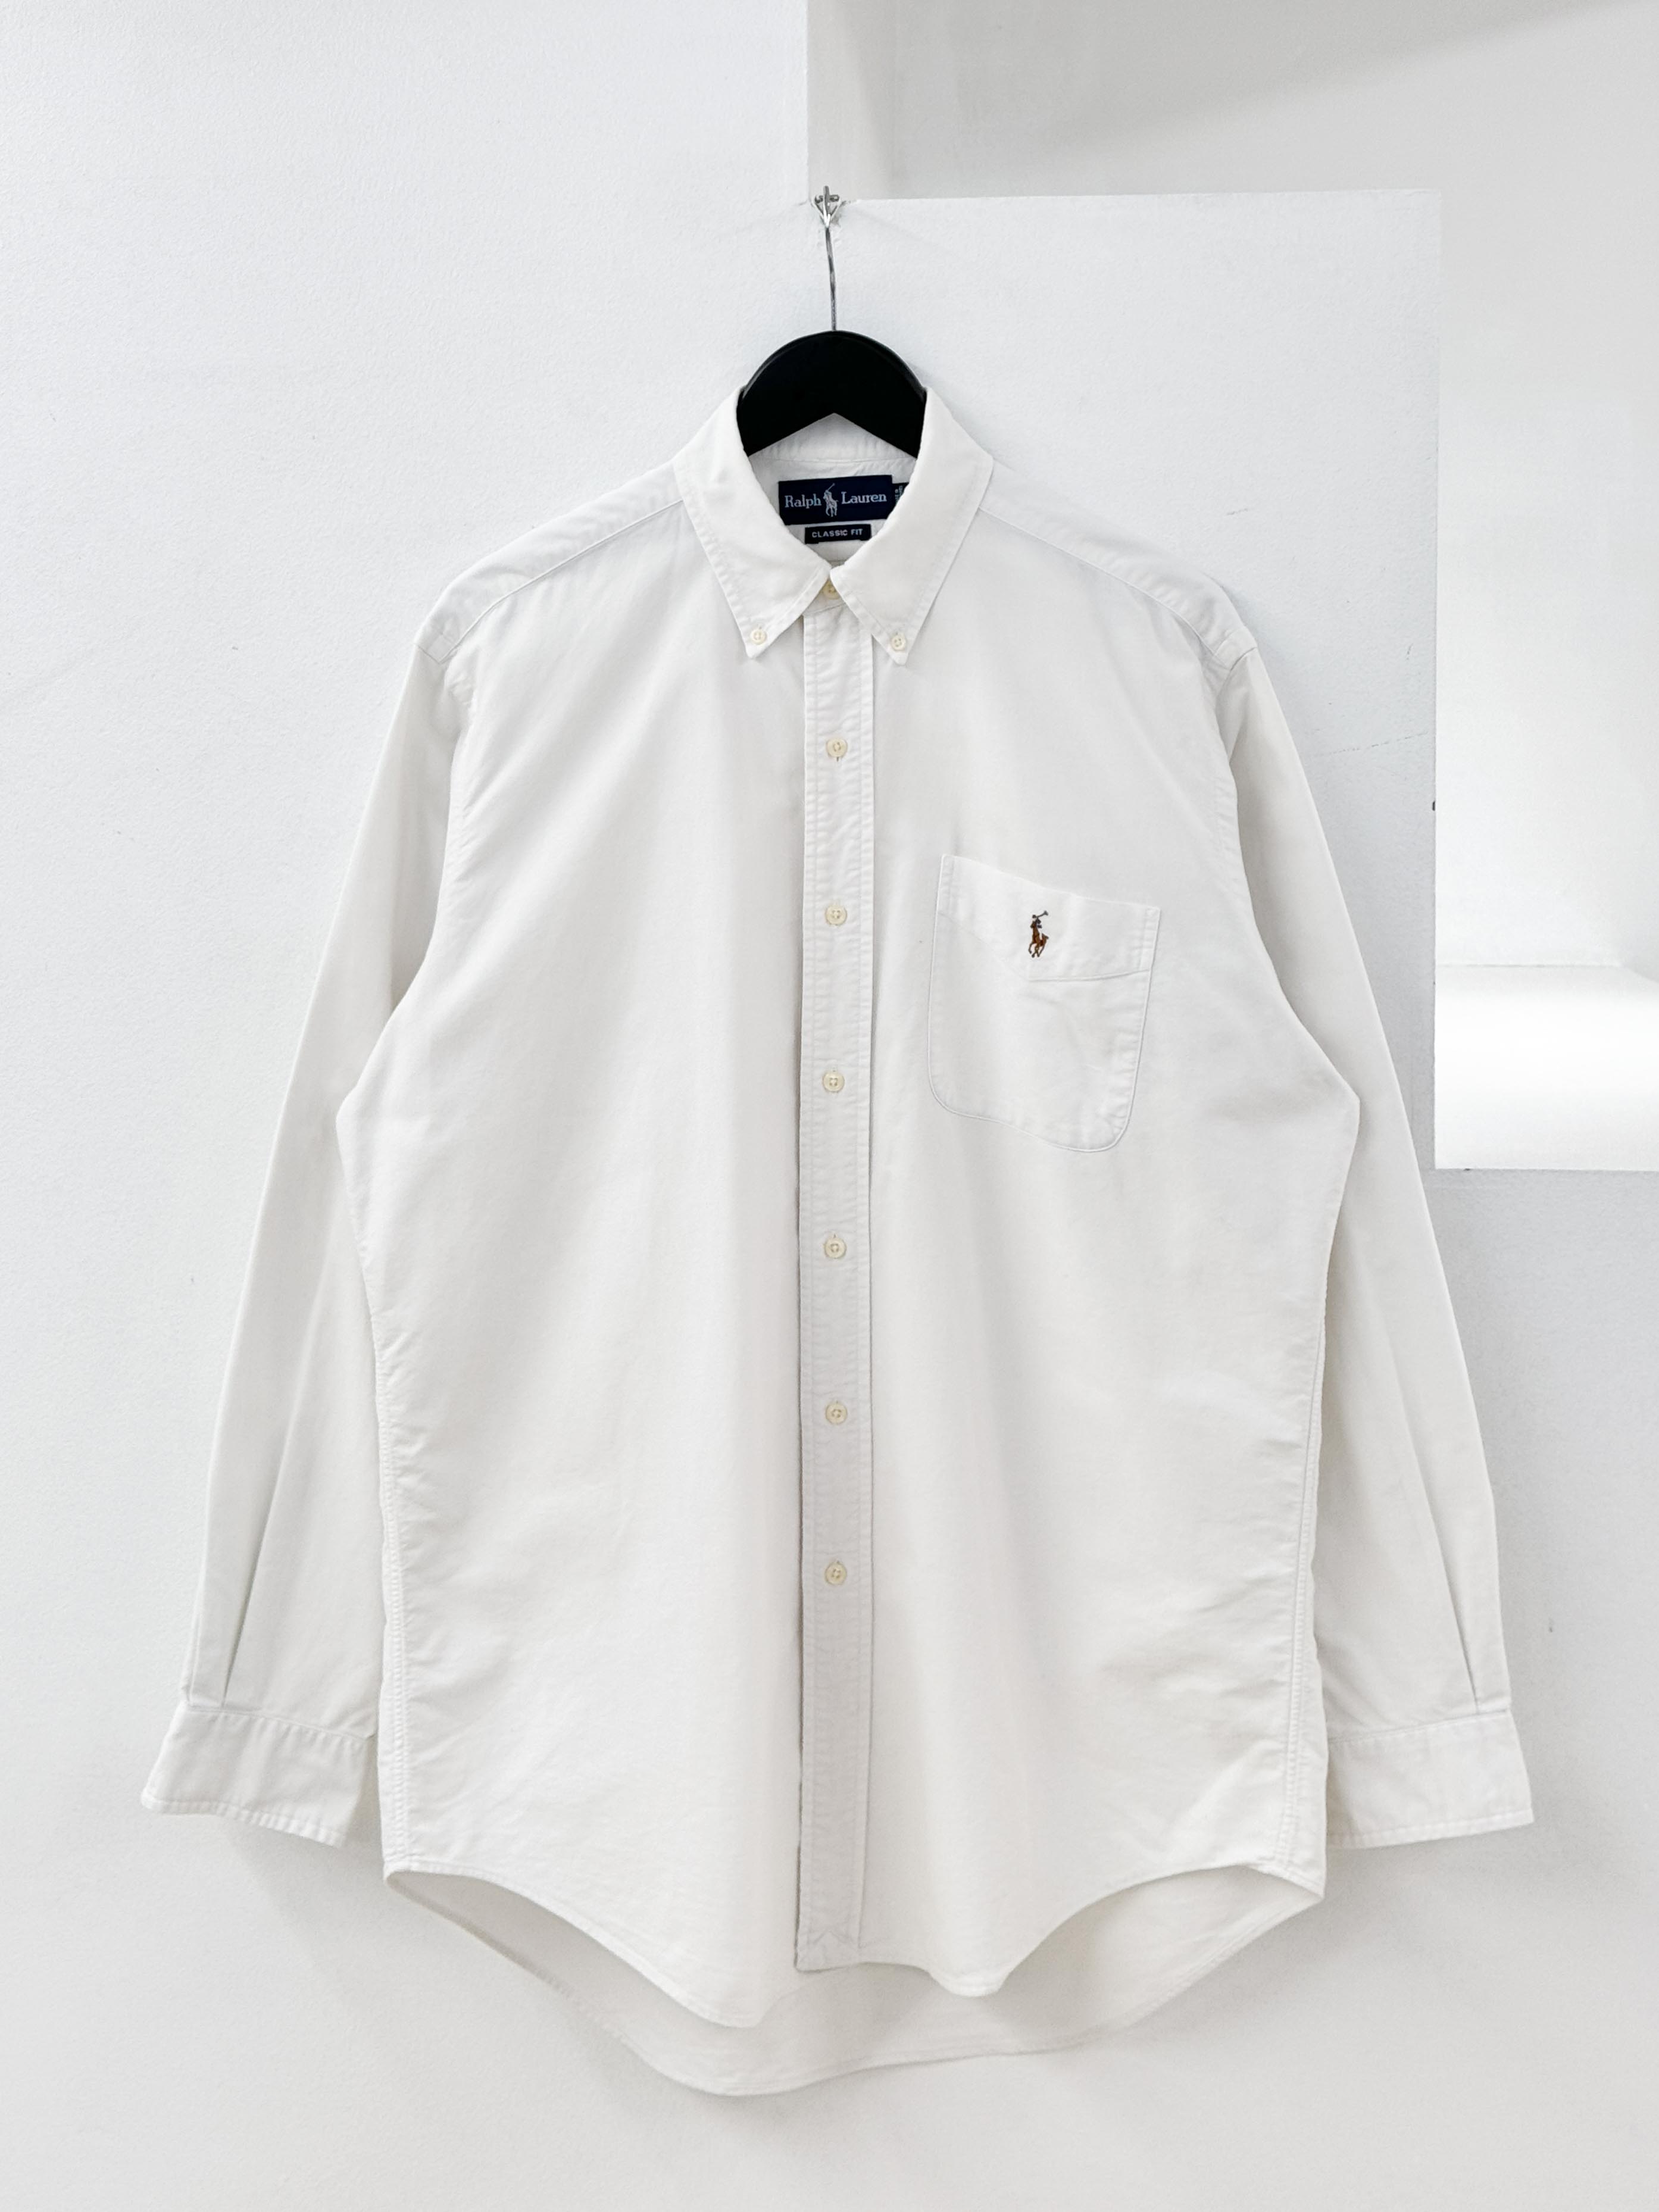 Ralph Lauren white oxford shirts